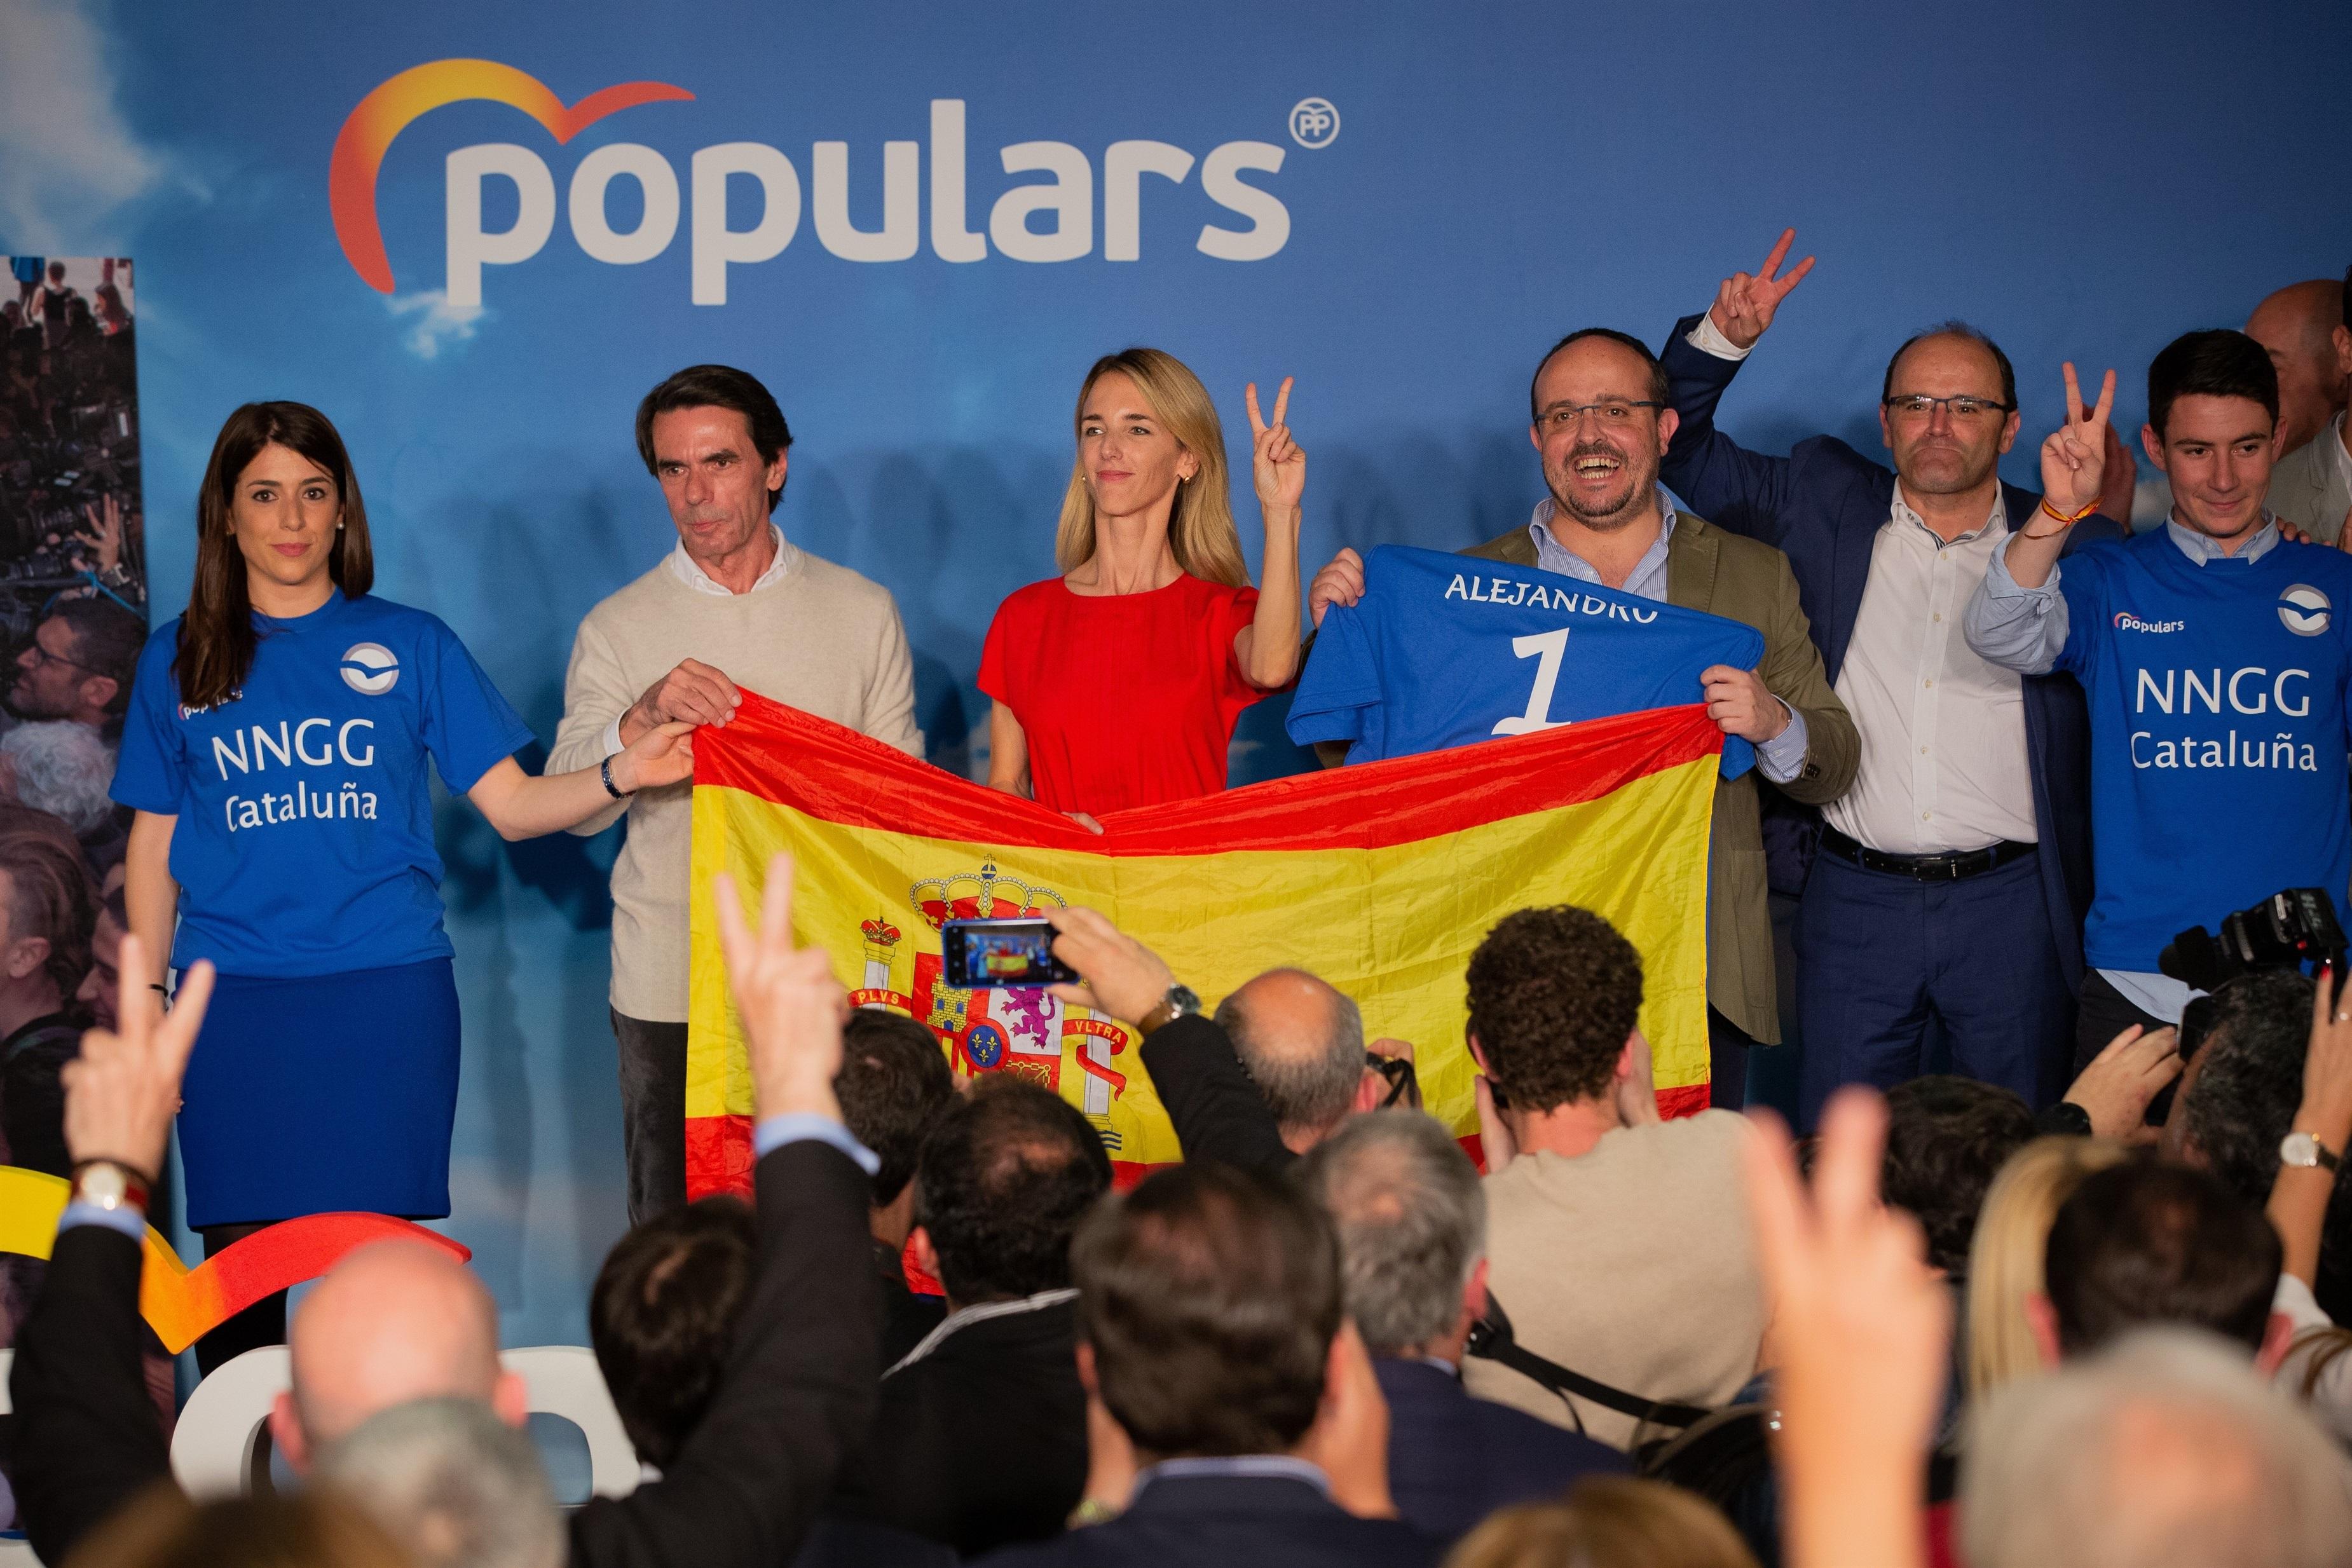 José María Aznar Cayetana Álvarez de Toledo Alejandro Fernández Daniel Serrano (PP) en un acto de campaña de las elecciones generales 2019 en Barcelona. EuropaPress 